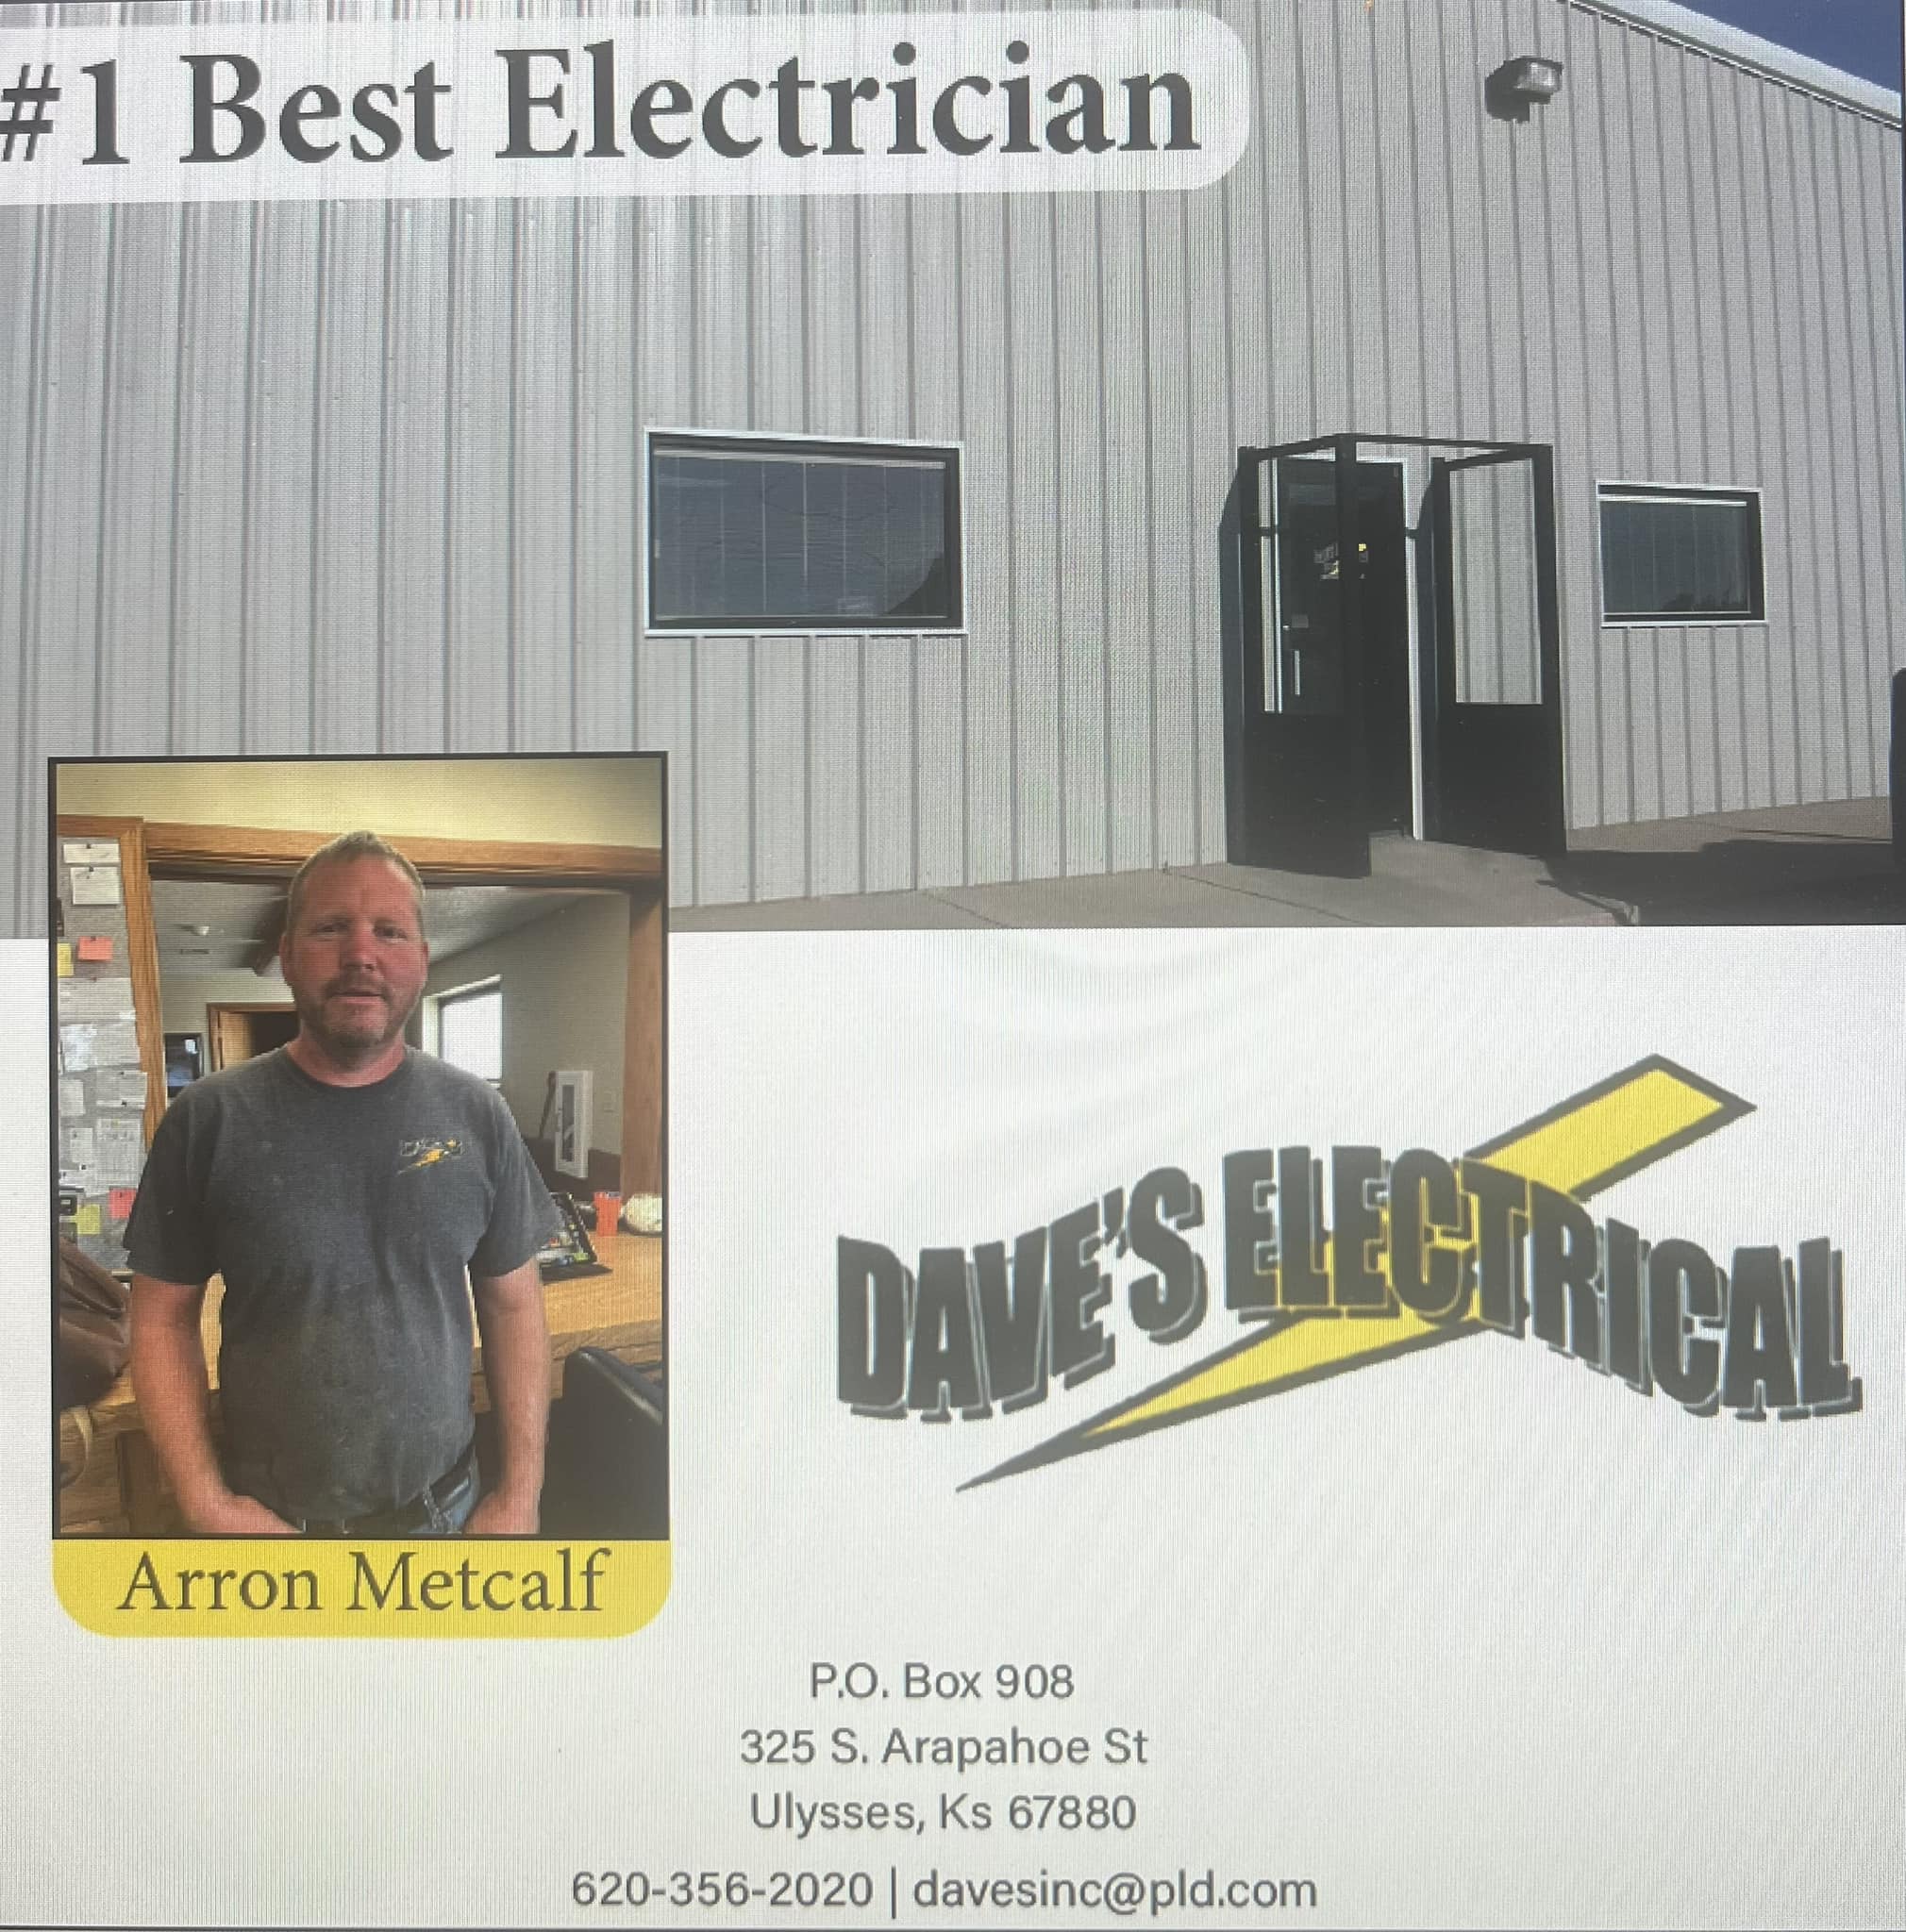 Dave's Electrical 325 S Arapahoe St, Ulysses Kansas 67880